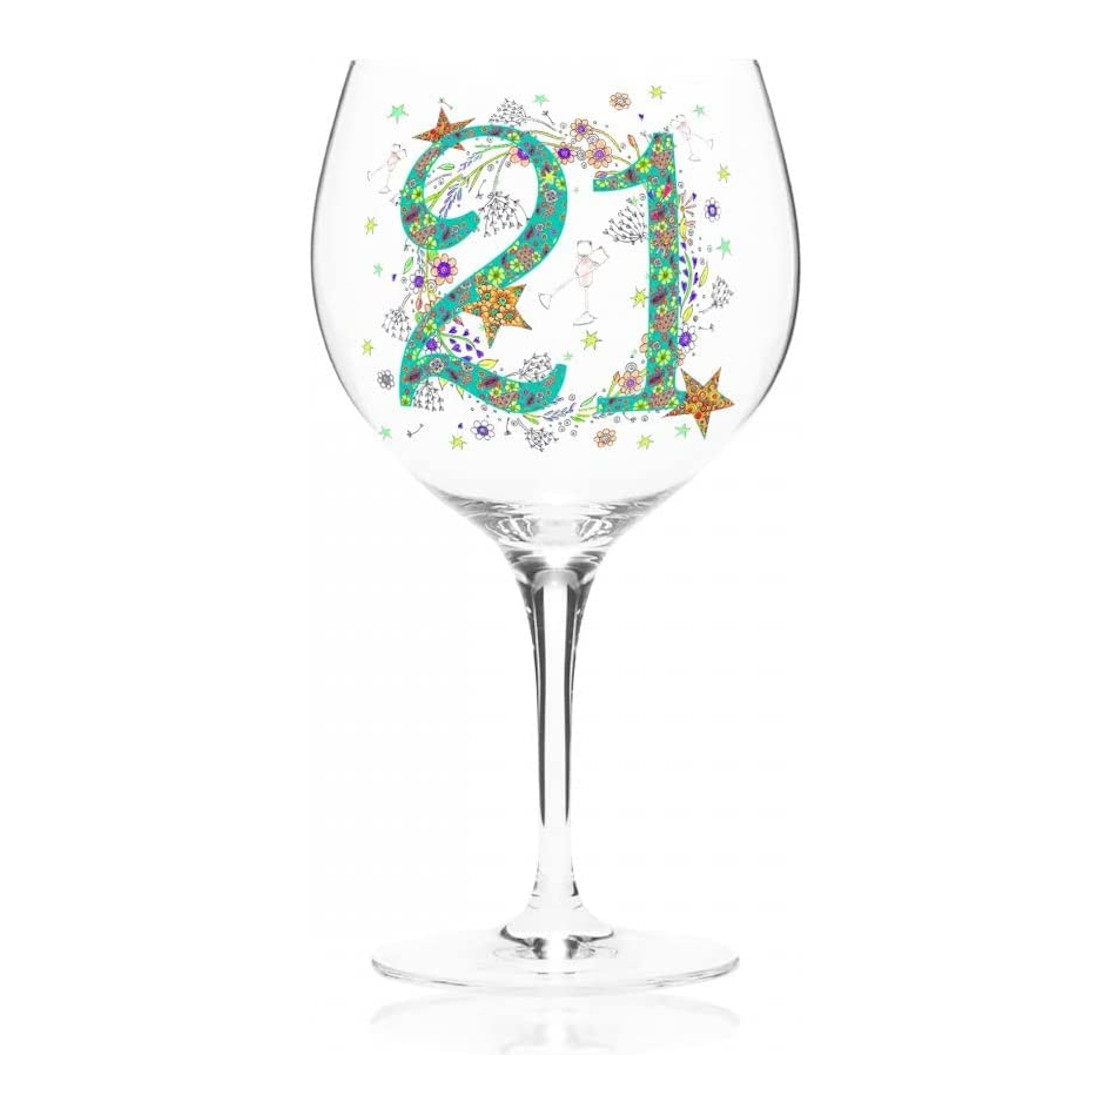 Doodleicious Art - 21st Birthday Celebration Wine / Gin Glass